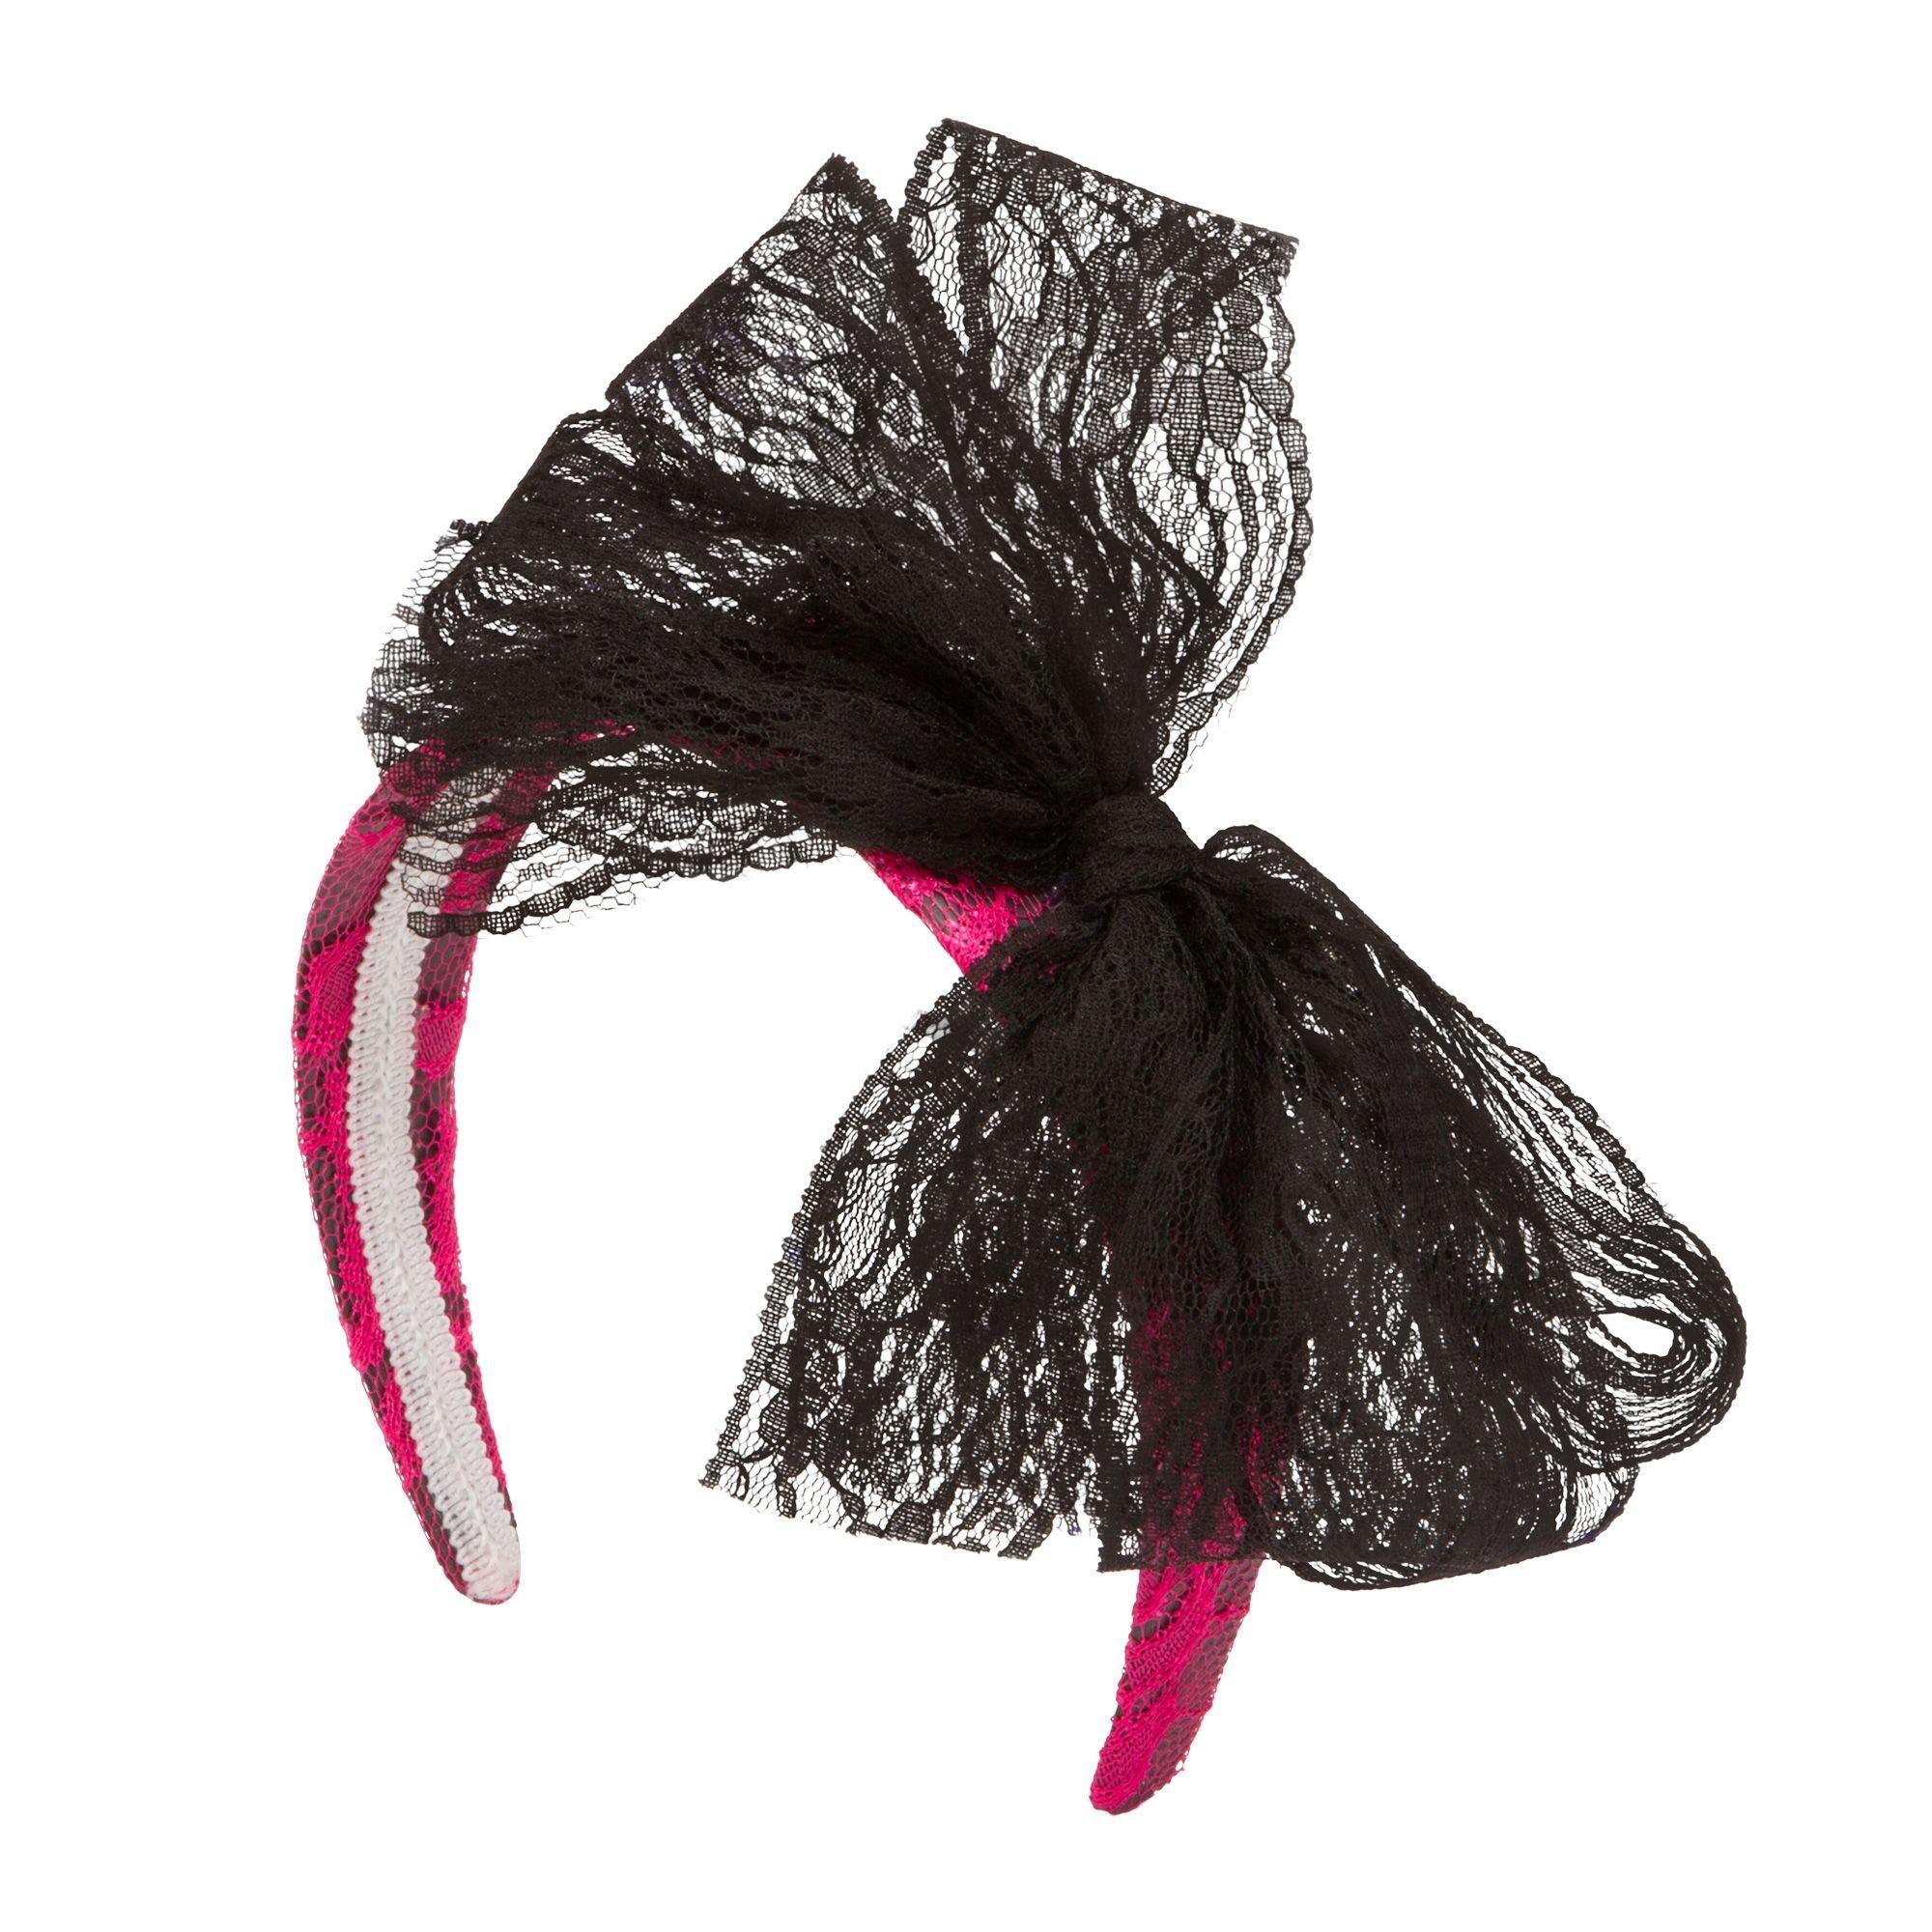 Bandtz Luxe Lace Bow Headband Black